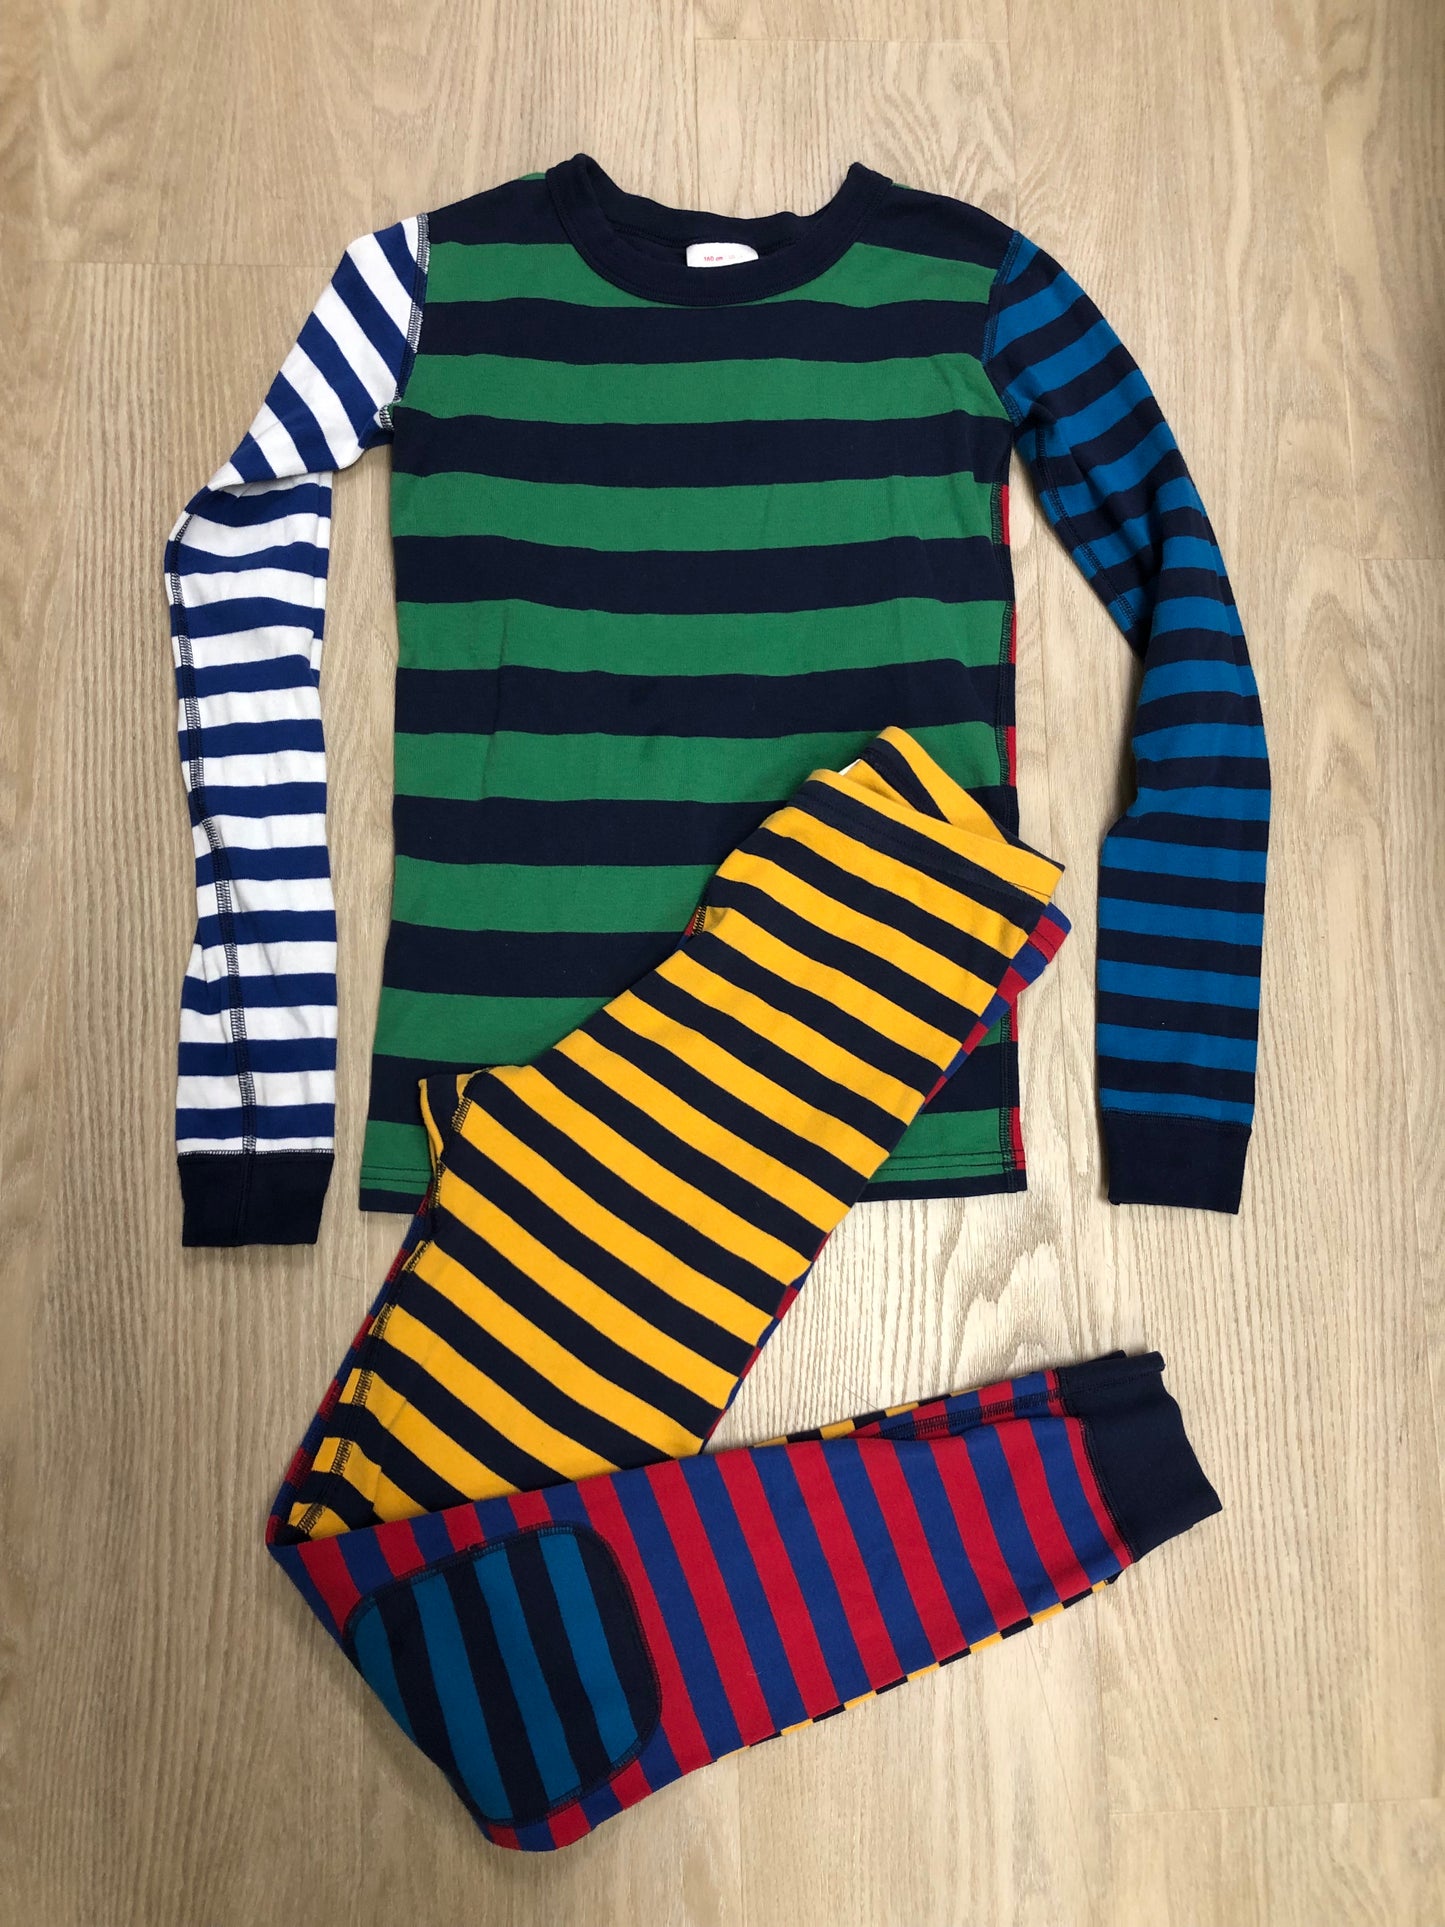 Hanna Andersson Child Size 14 Multi-Color Stripe Pajamas